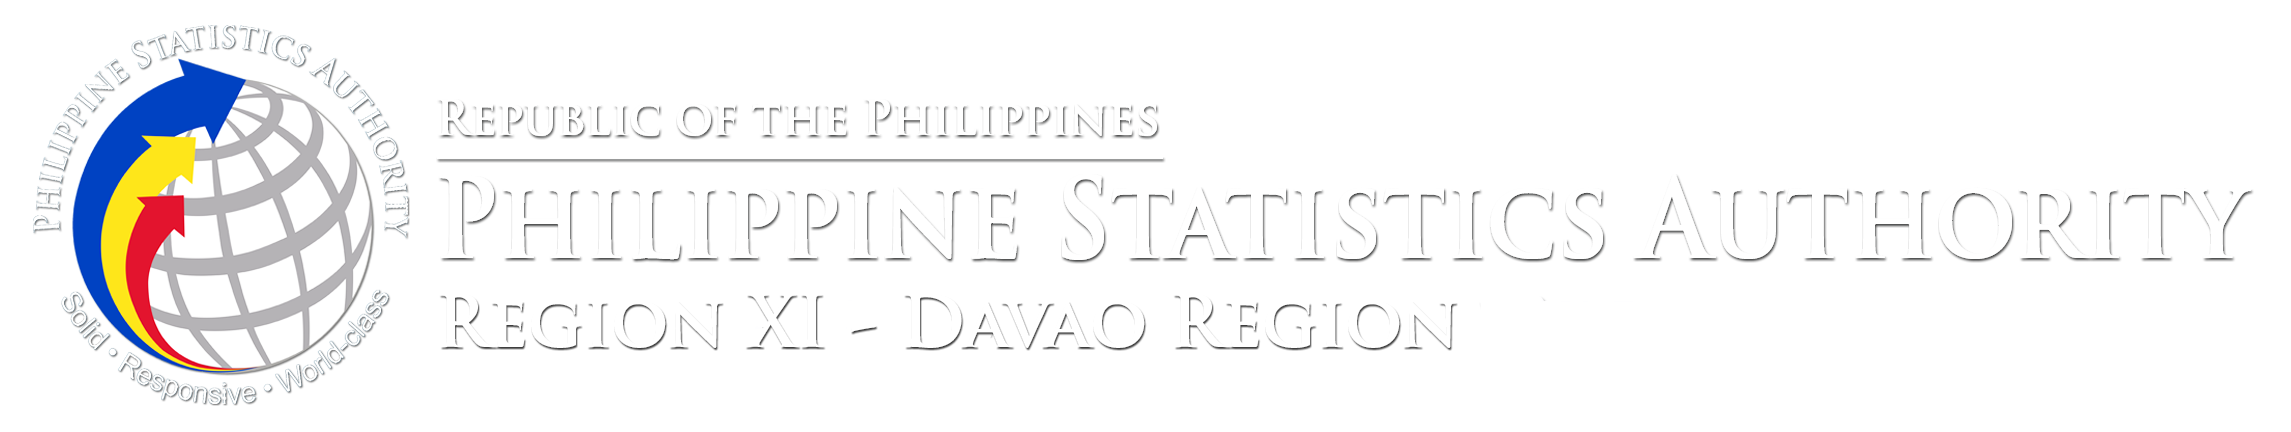 Philippine Statistics Authority Region XI